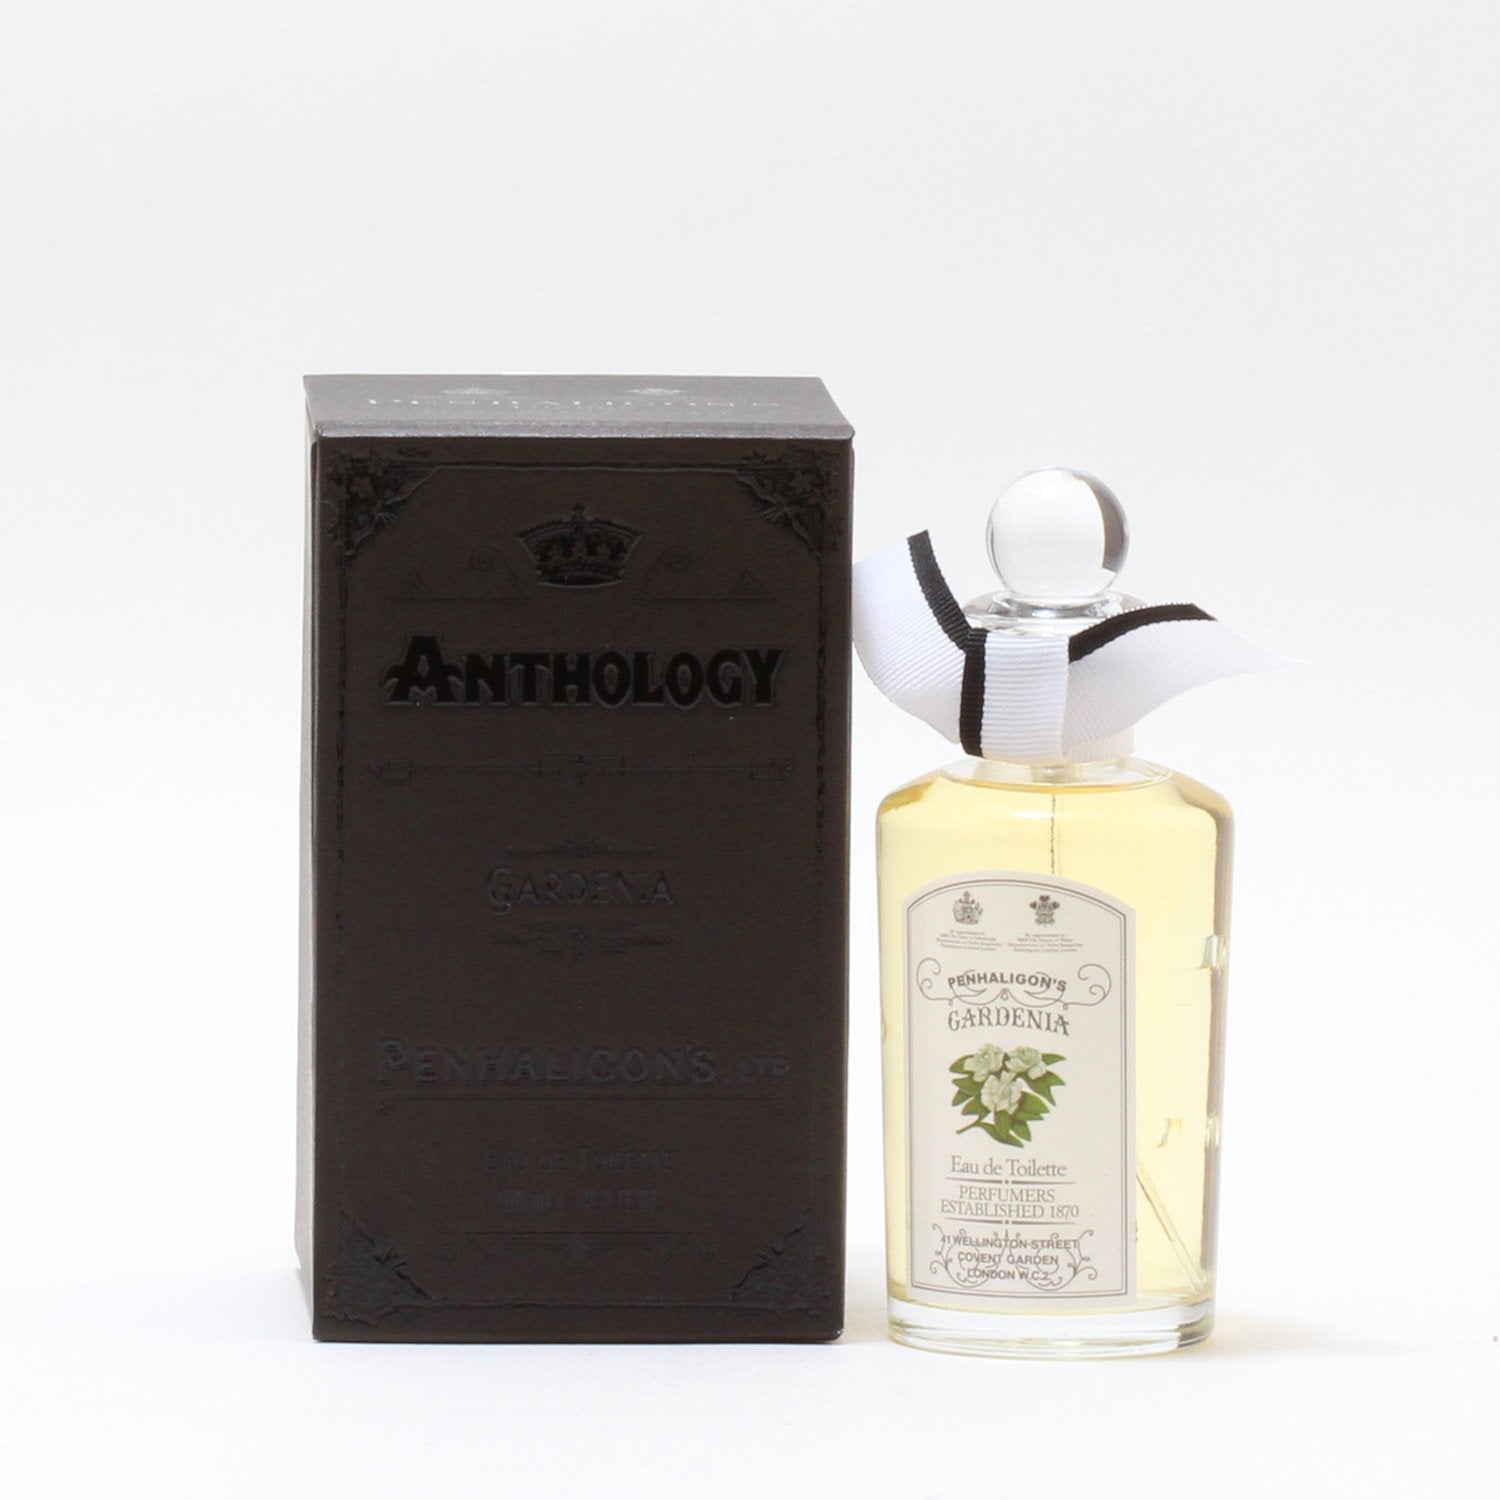 Perfume - PENHALIGON'S ANTOLOGY GARDENIA FOR WOMEN - EAU DE TOILETTE SPRAY, 3.4 OZ